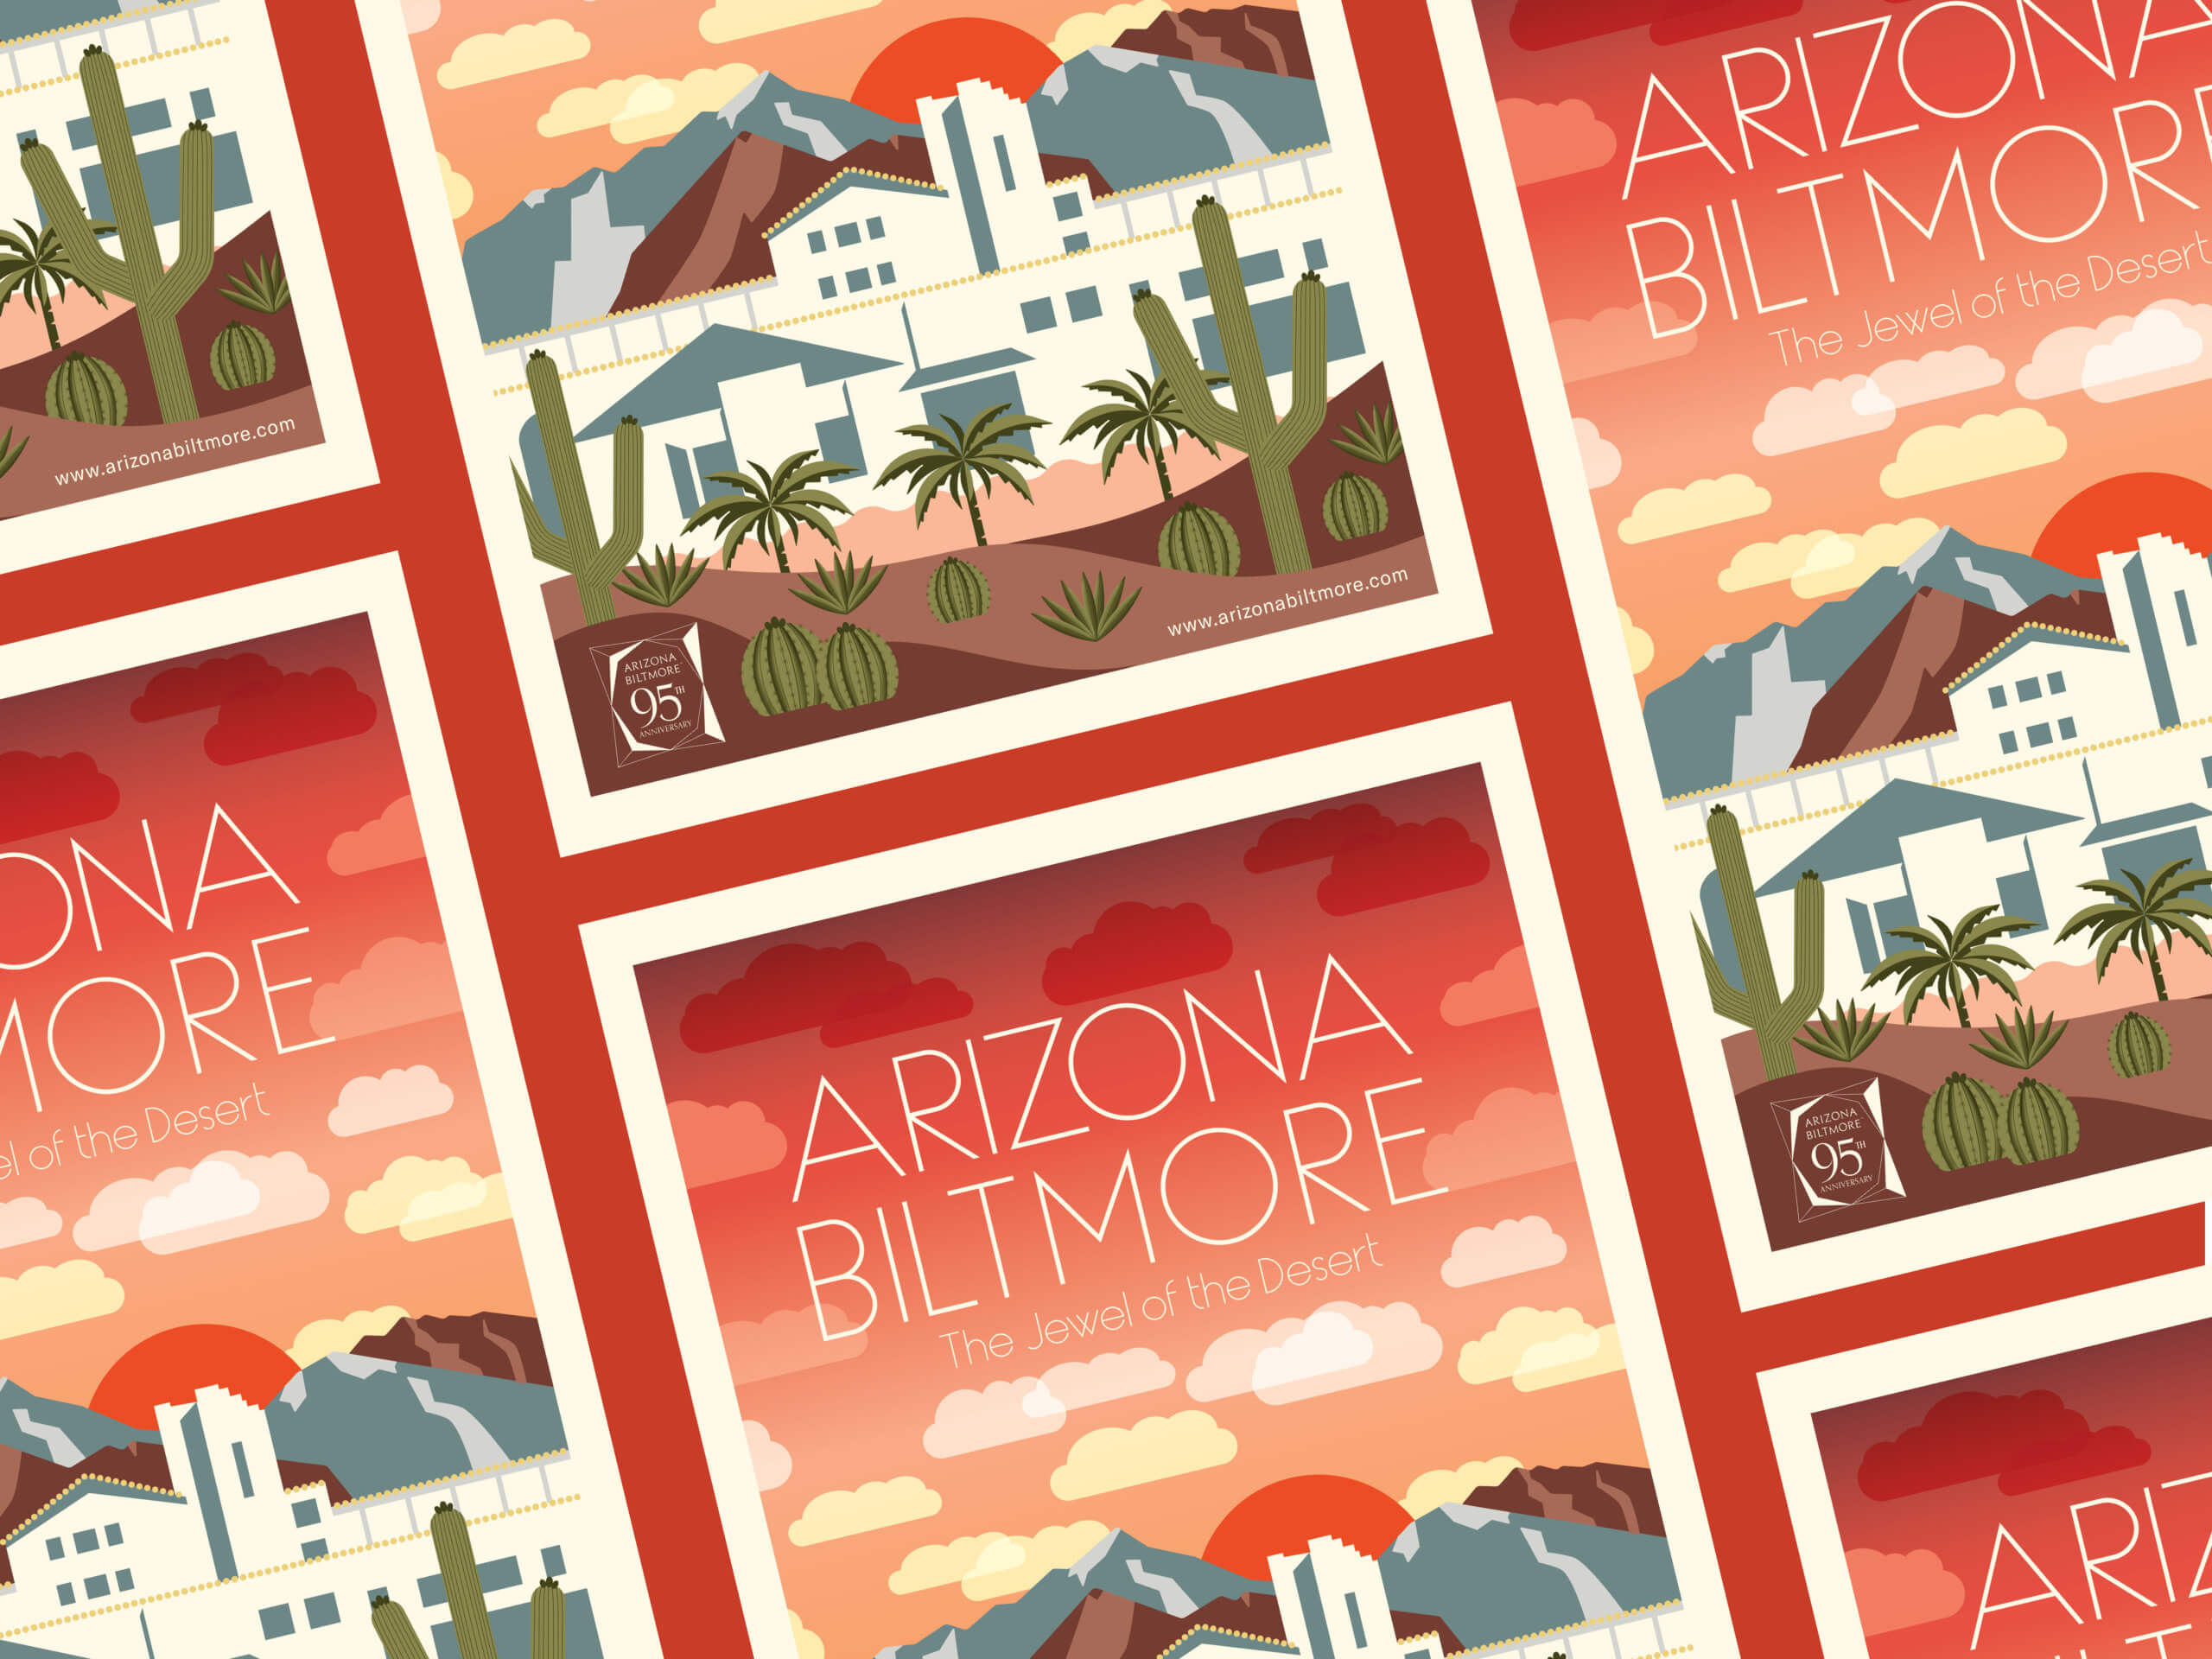 Arizona Biltmore's 95th Anniversary